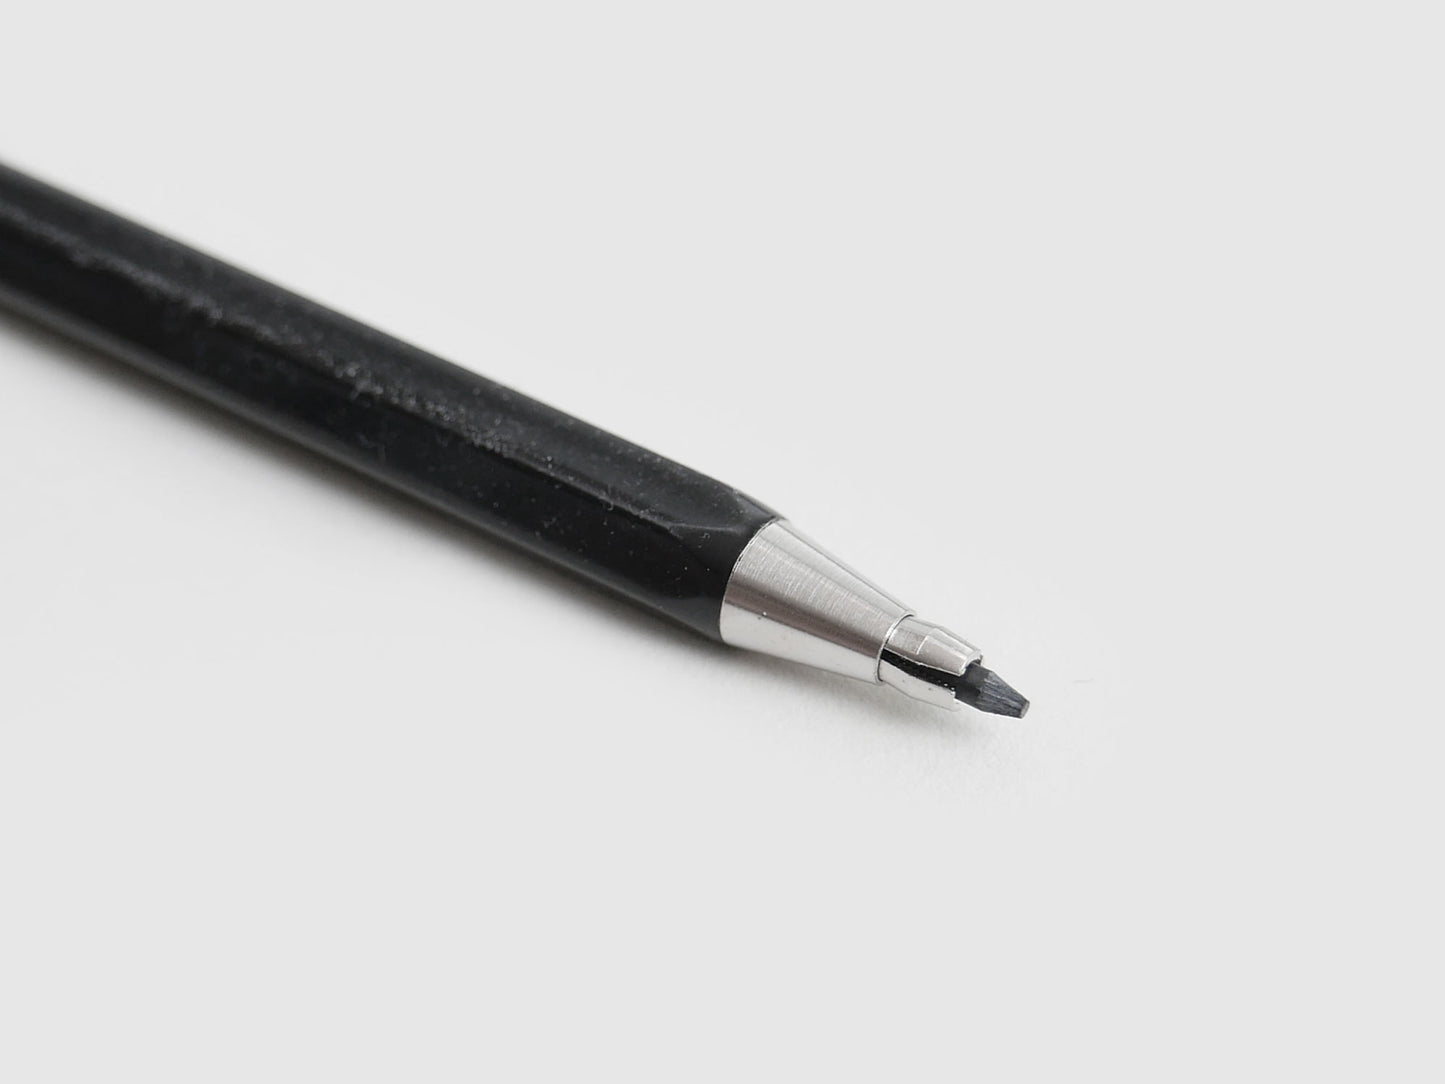 Versatil Pencil